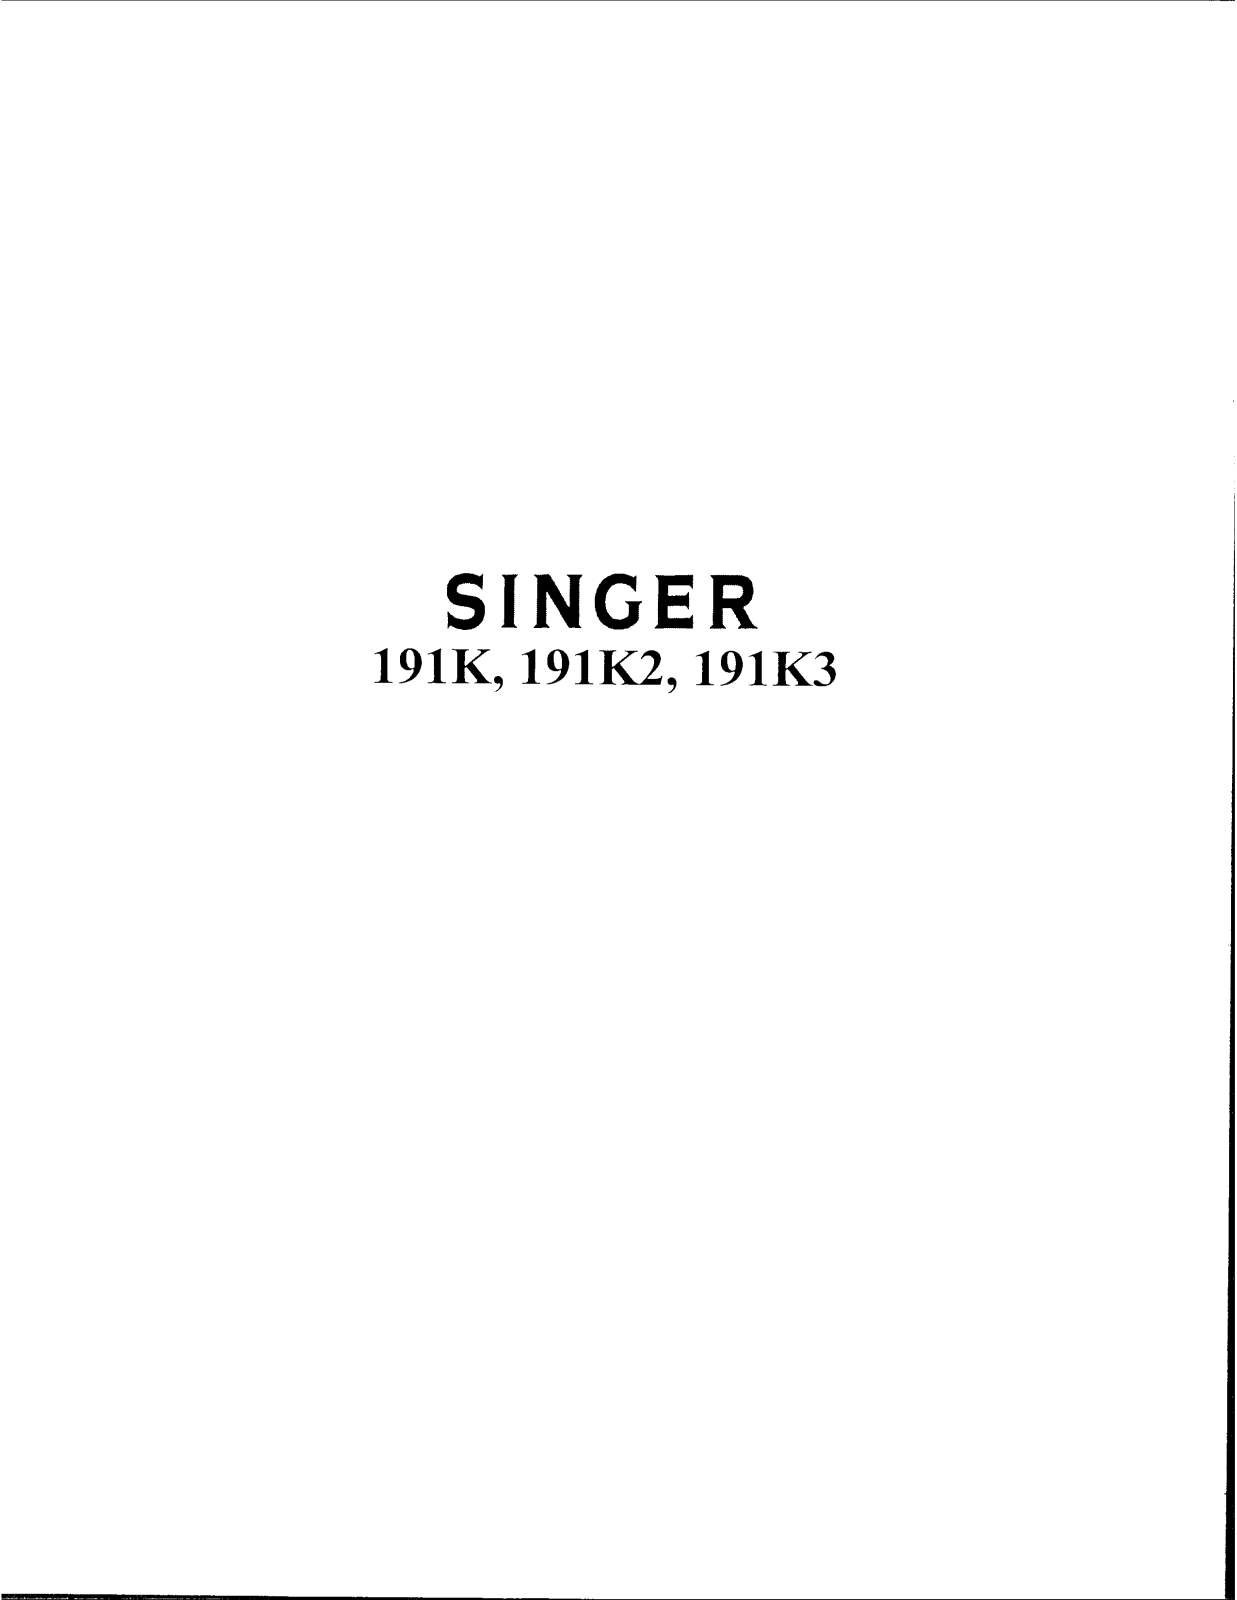 Singer 191K, 191K3, 191K2 Instruction Manual